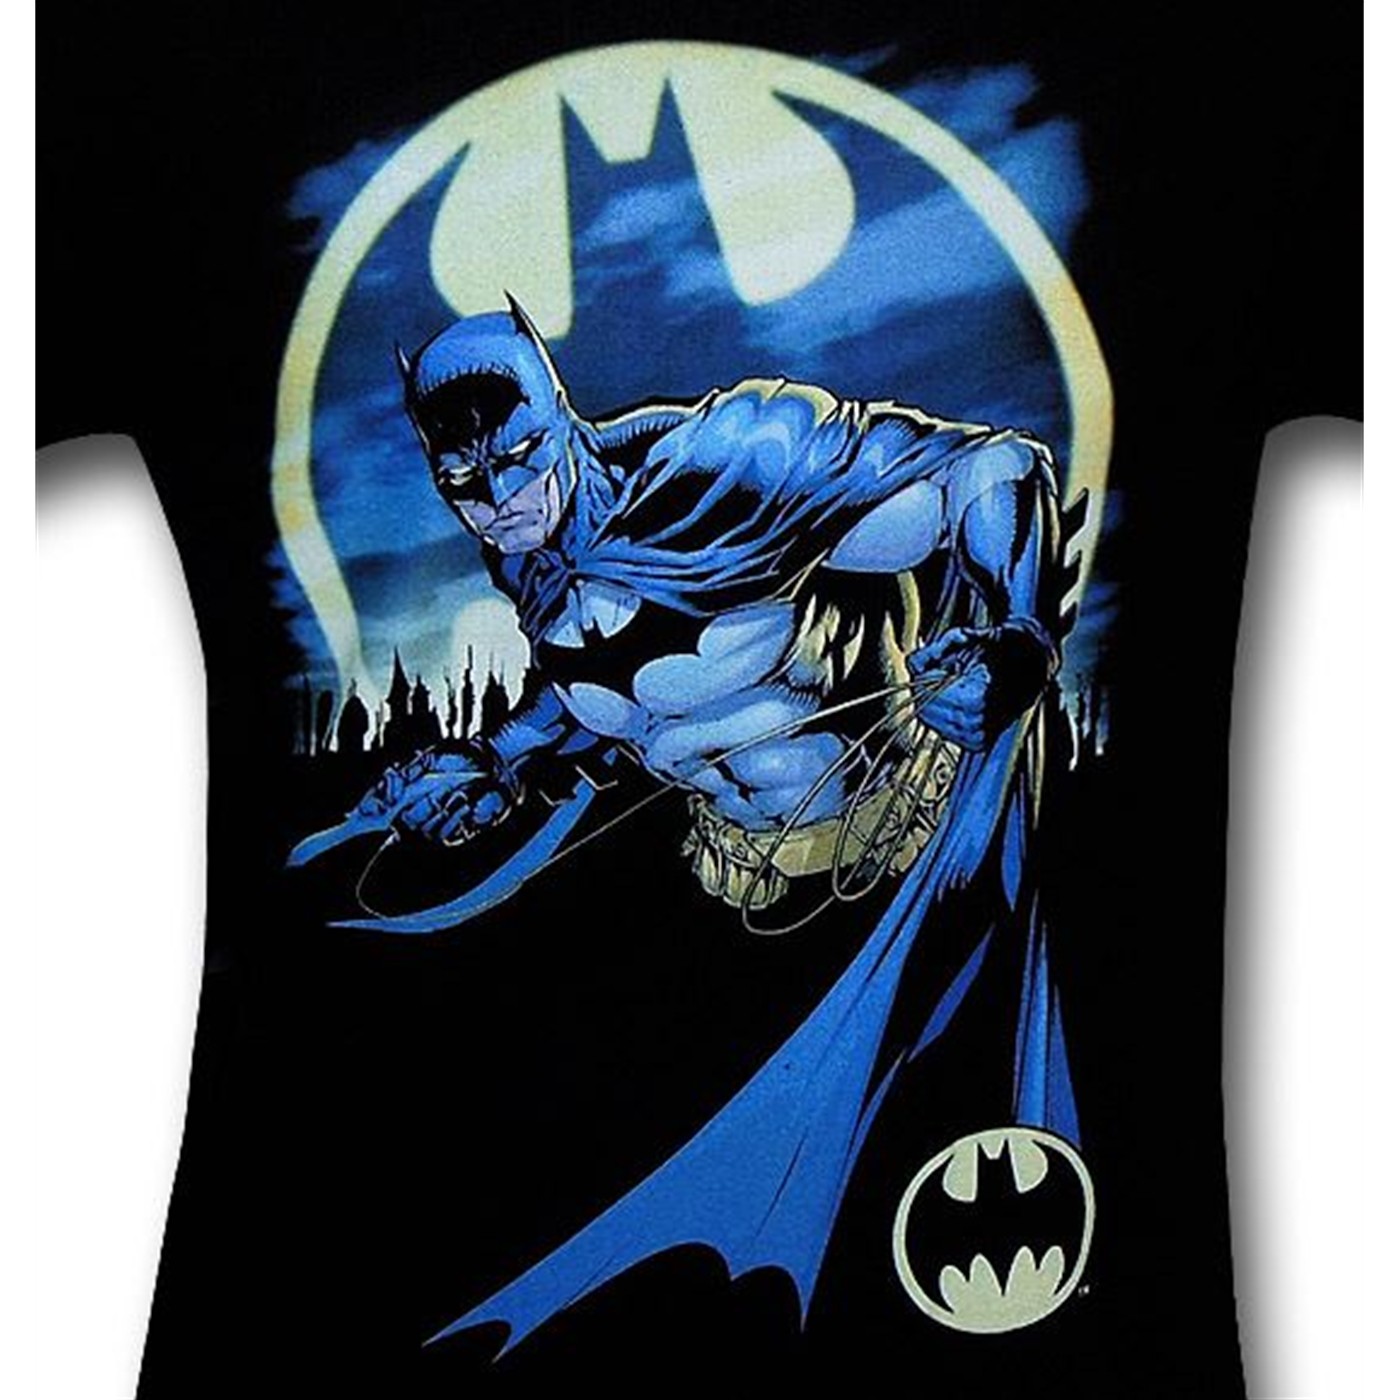 Batman Bat Signal Response Black T-Shirt